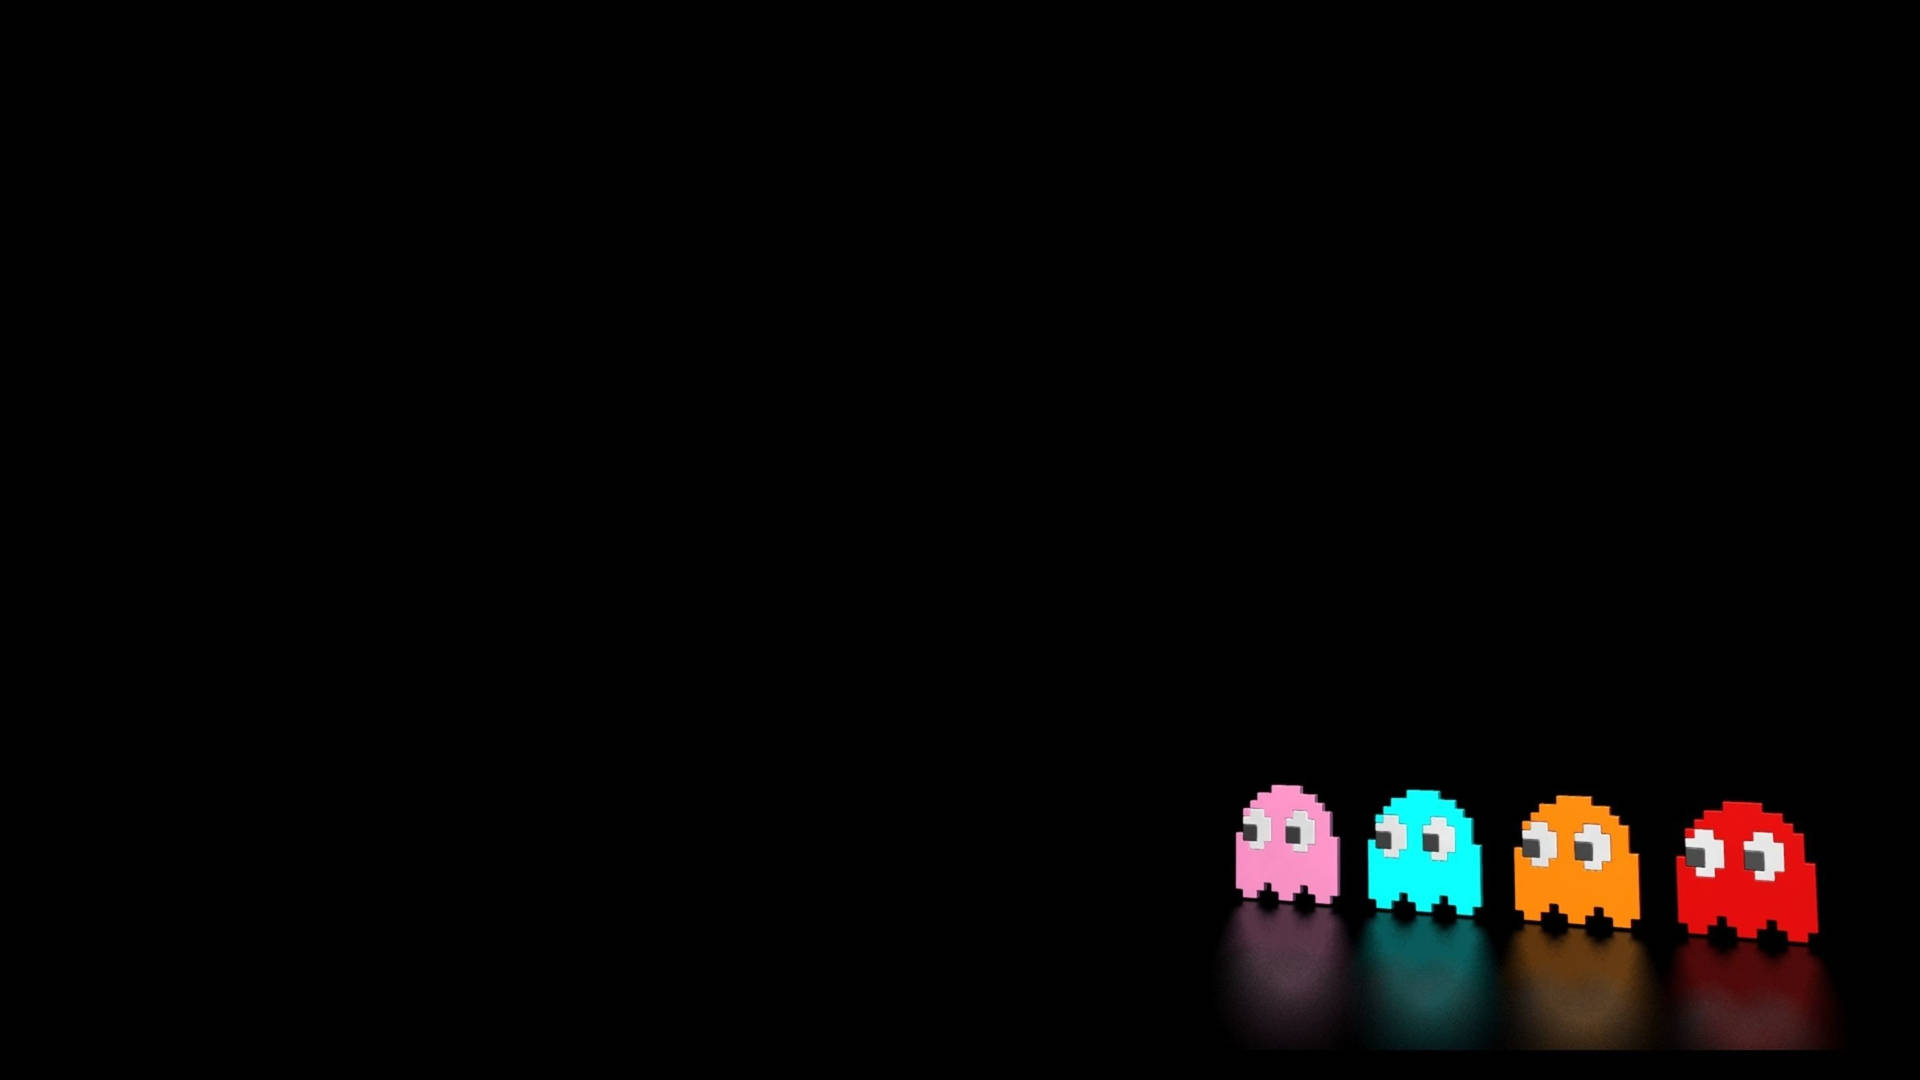 Aesthetic Retro Pac-man Ghosts Wallpaper